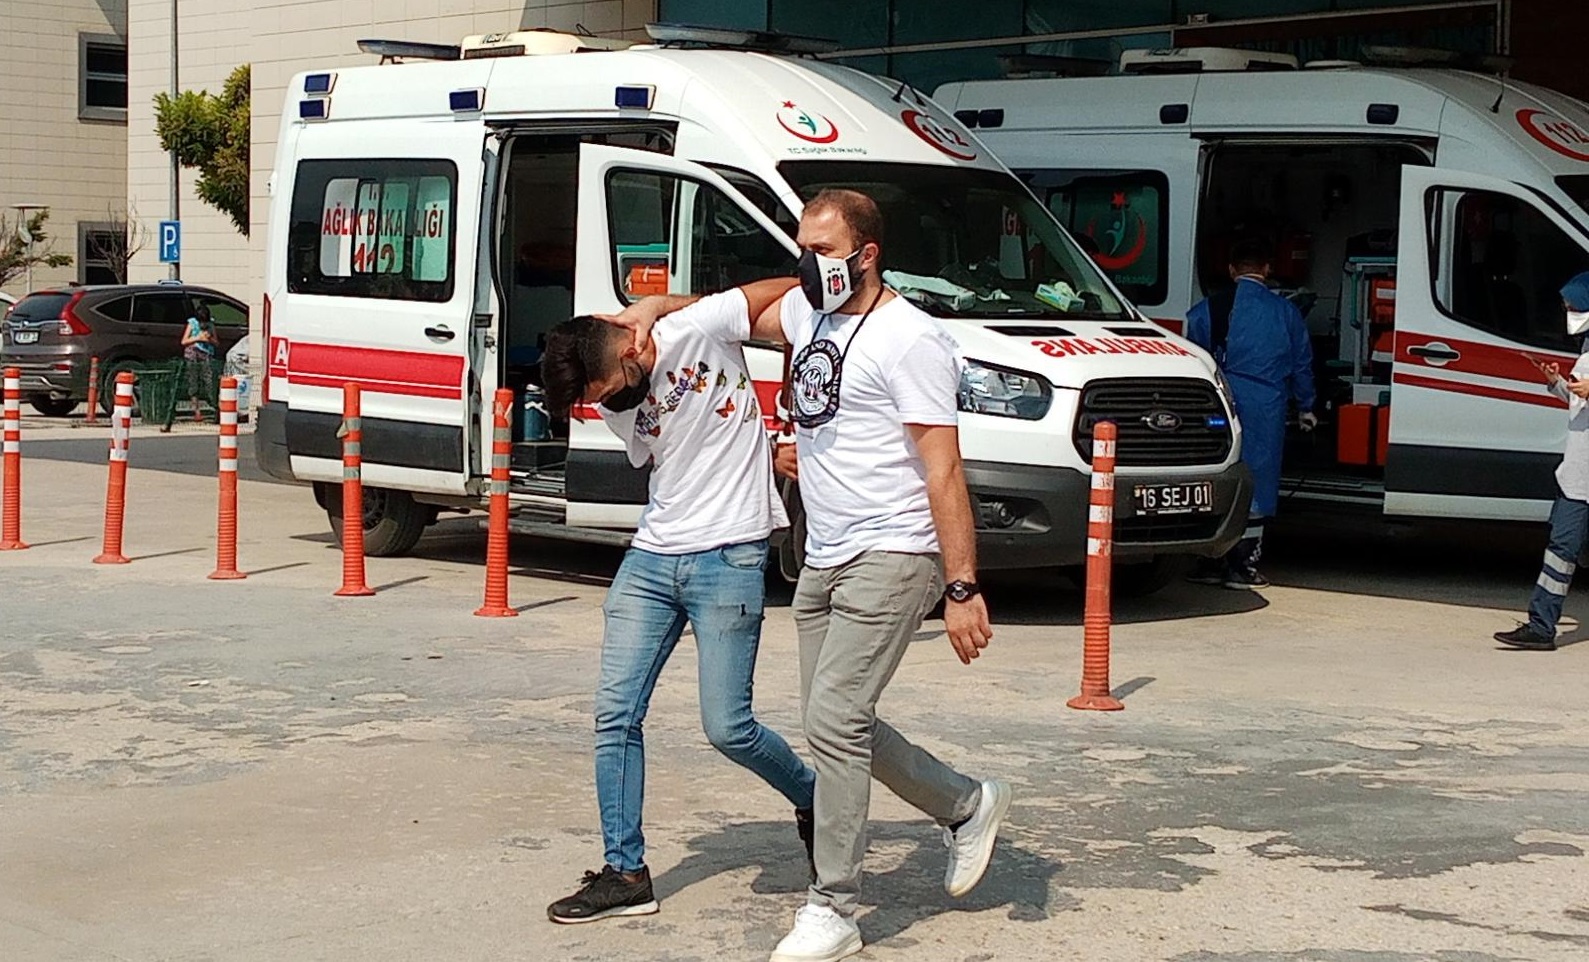 Bursa'da dur ihtarına uymayan kişi yakalandı